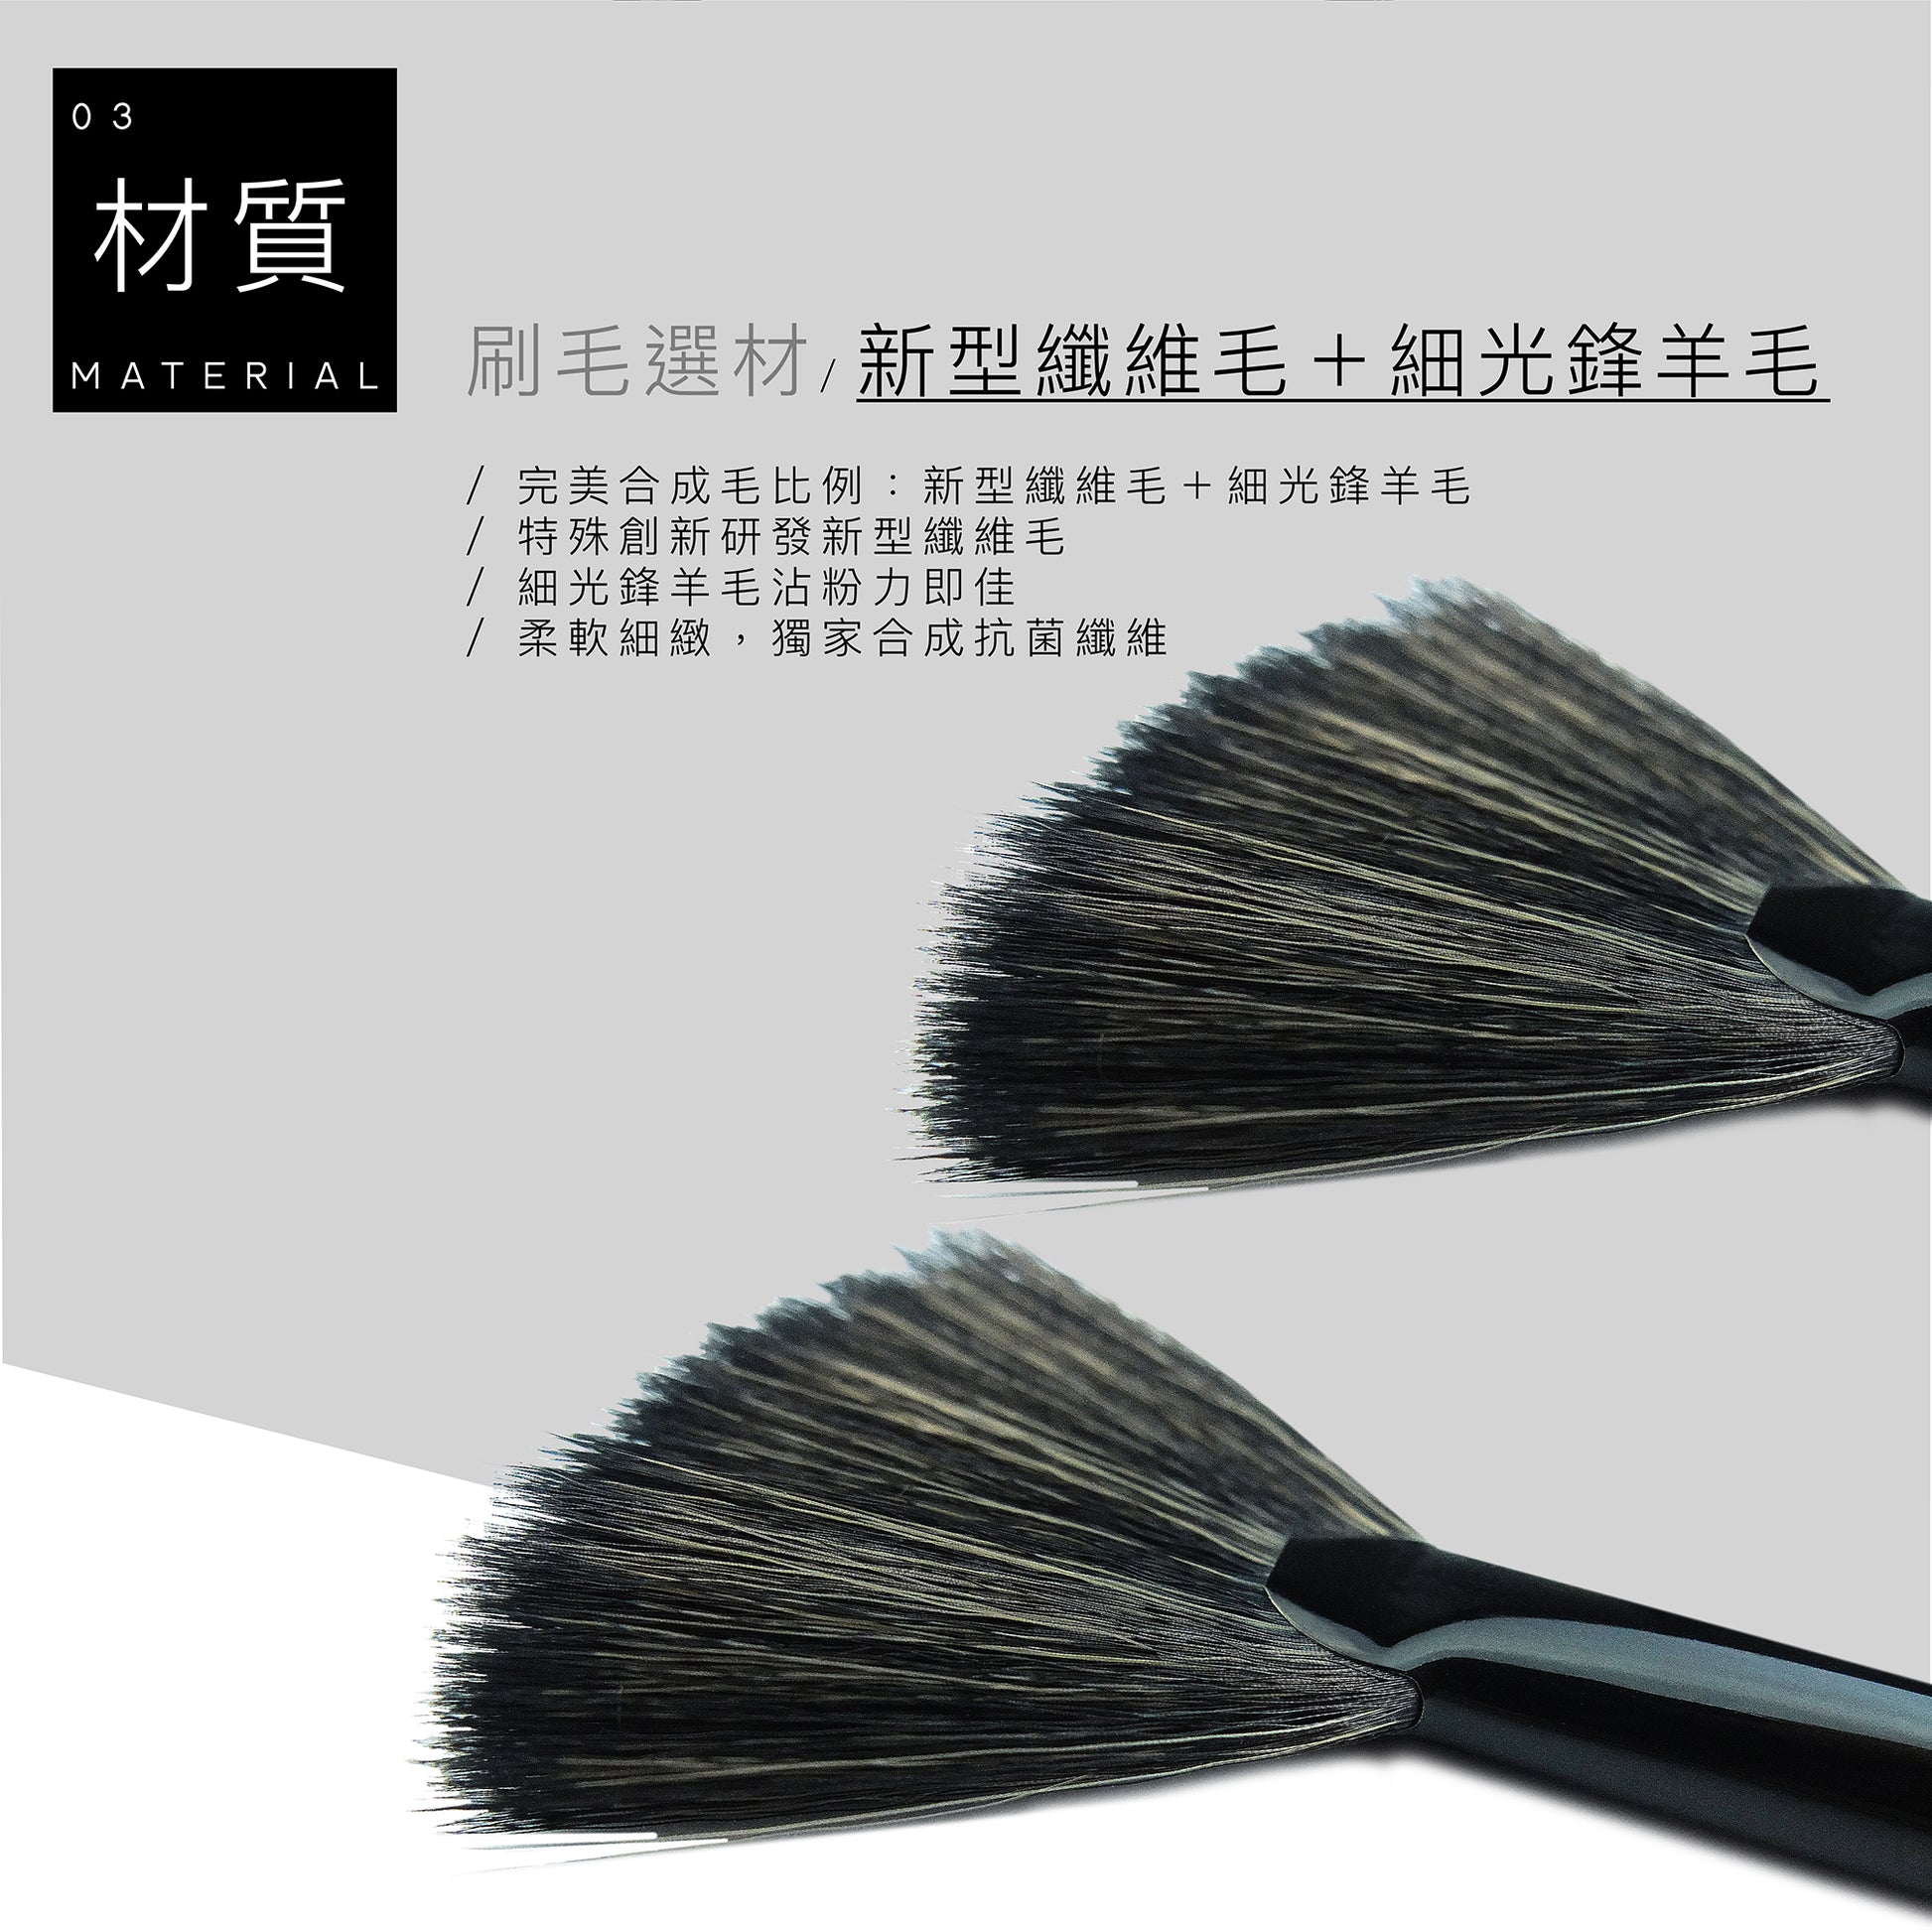 C12 扇型刷 - 黑色系列 化妝刷 刷具 , C12 Fan Brush, Black Makeup Brush Collection